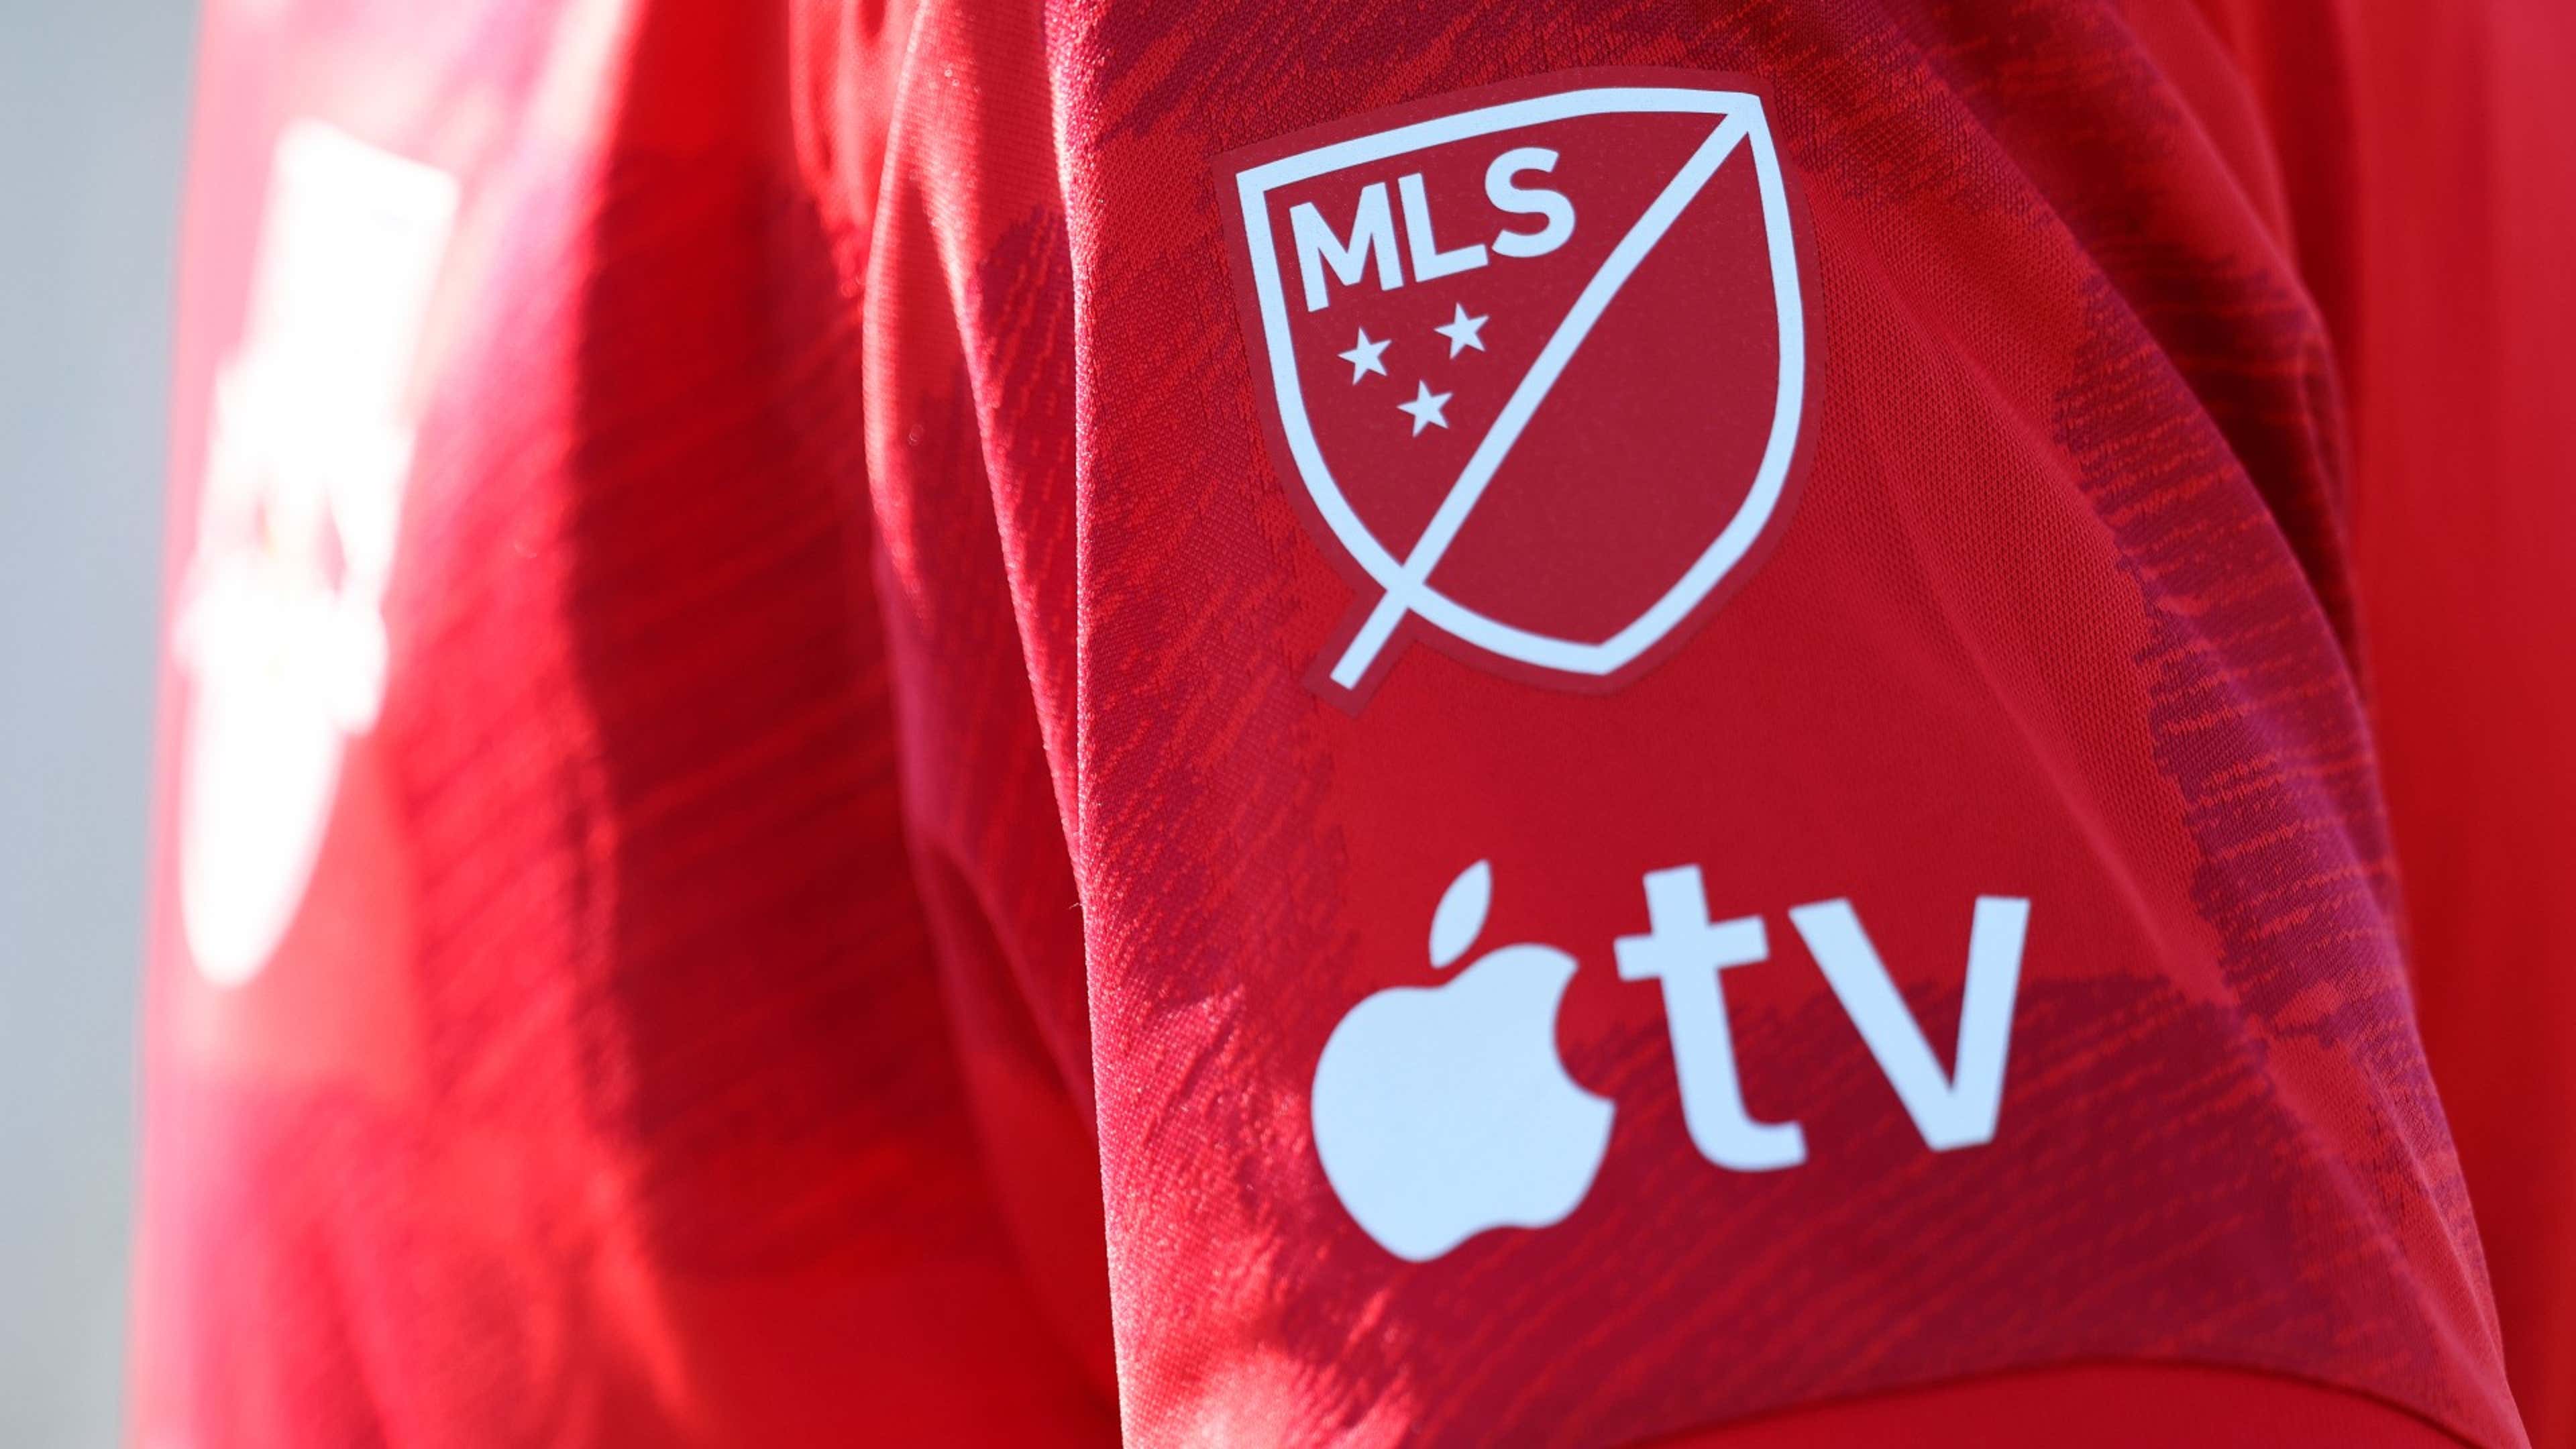 MLS logo above Apple TV logo on New York Red Bulls jersey